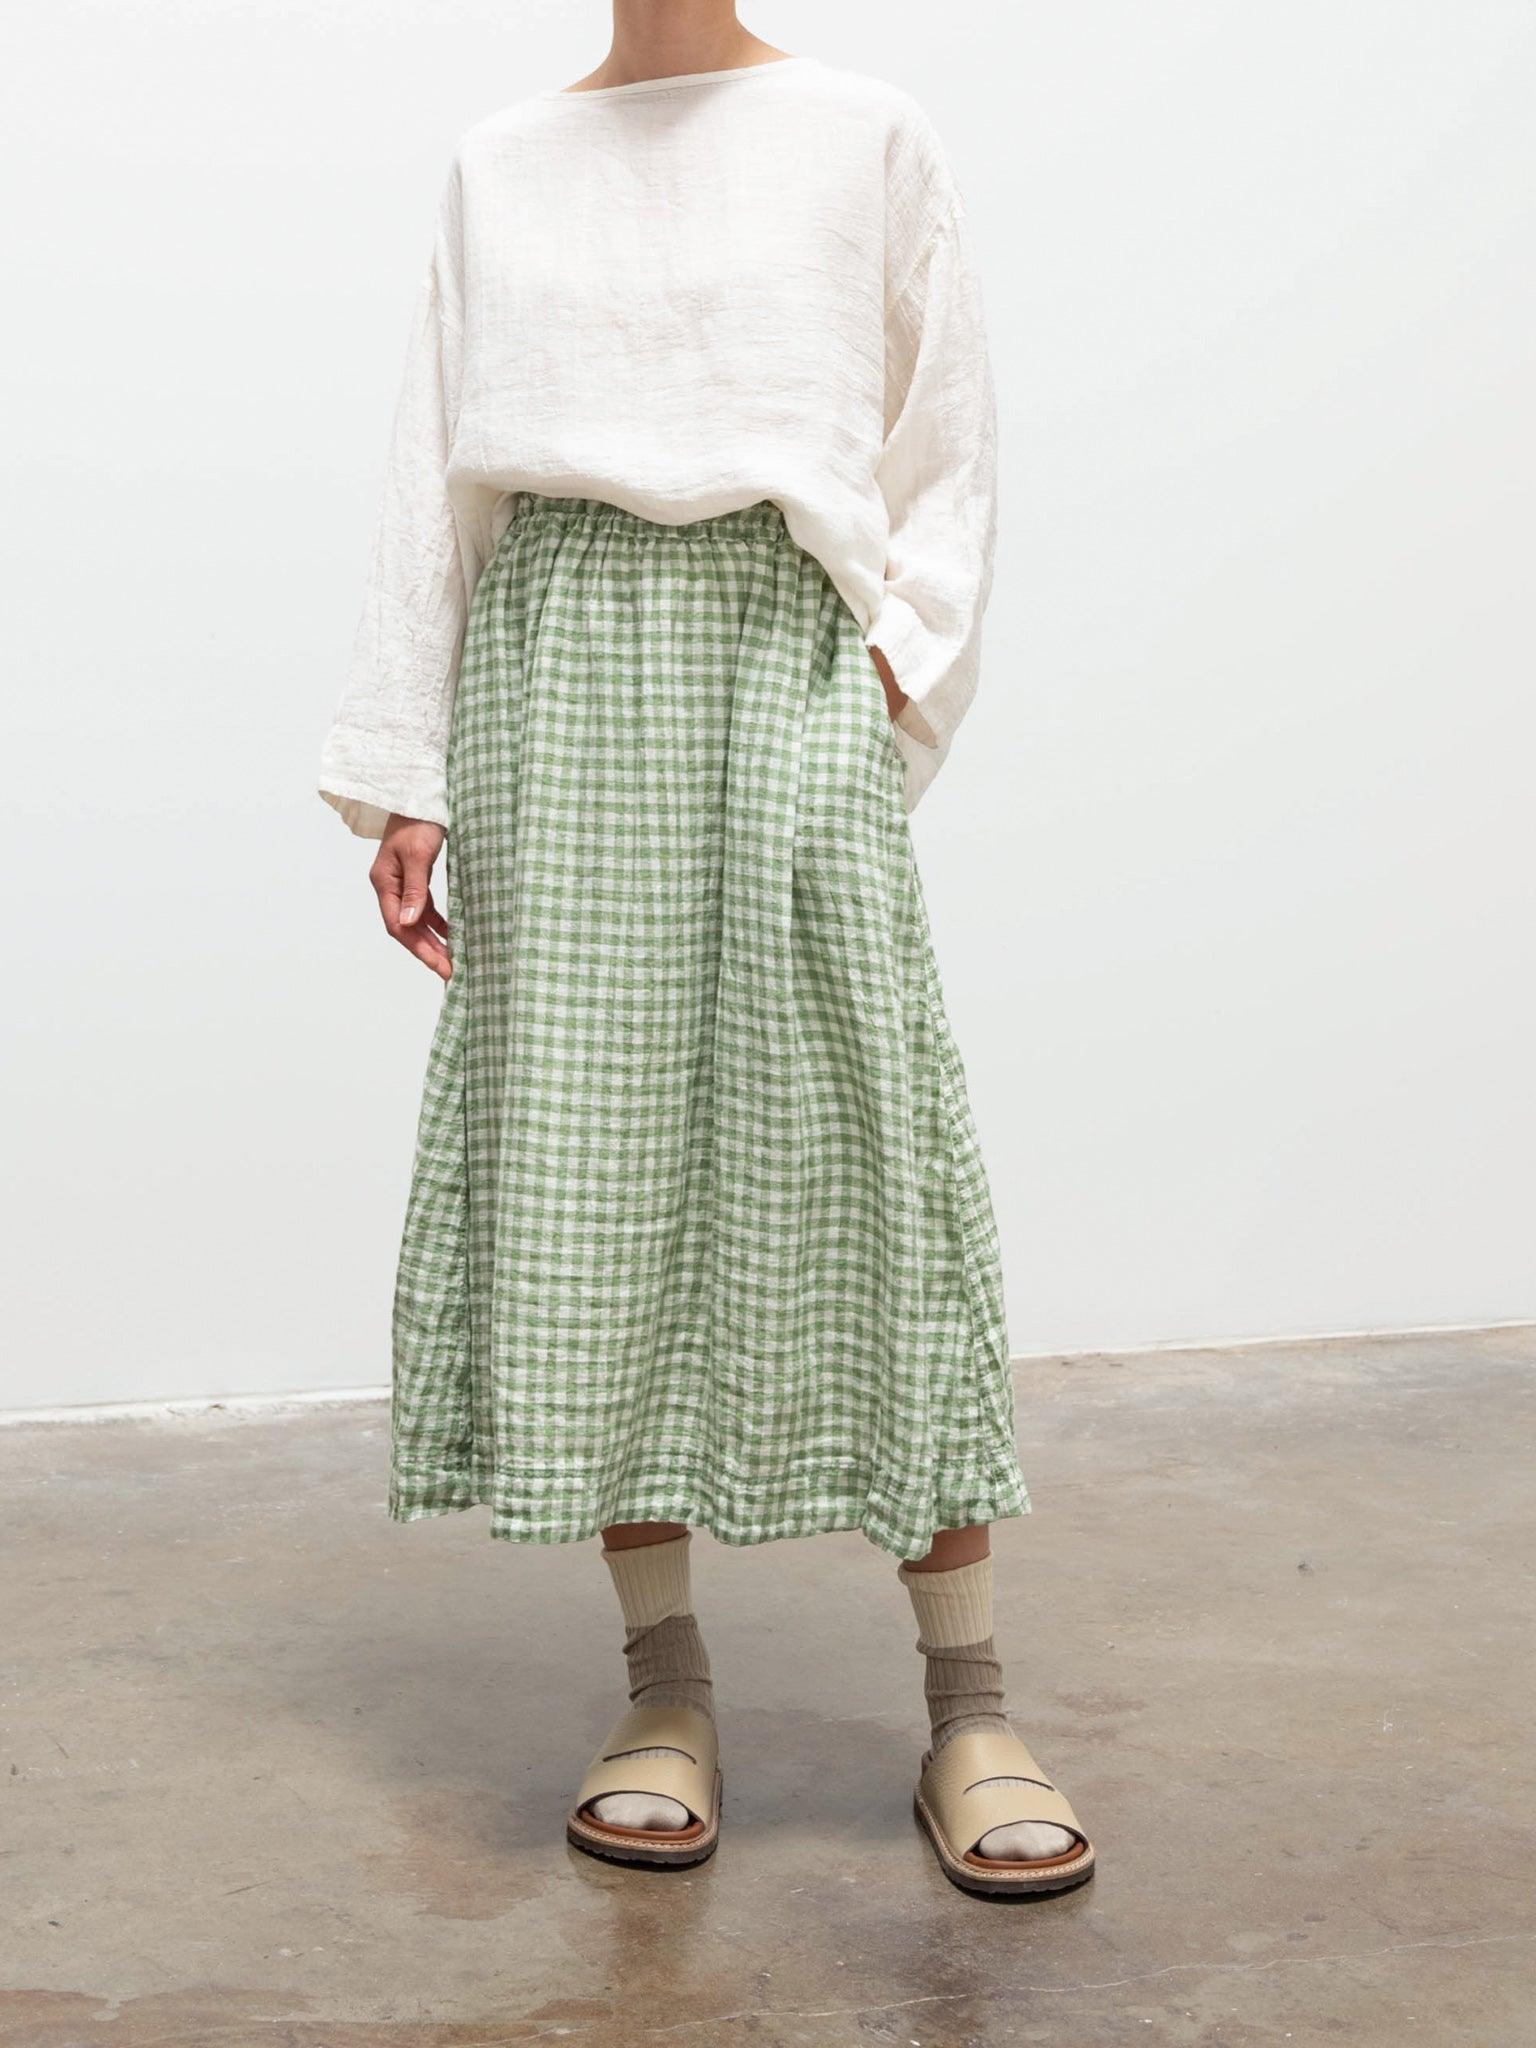 Namu Shop - Ichi Antiquites Linen Gingham Skirt - White x Green